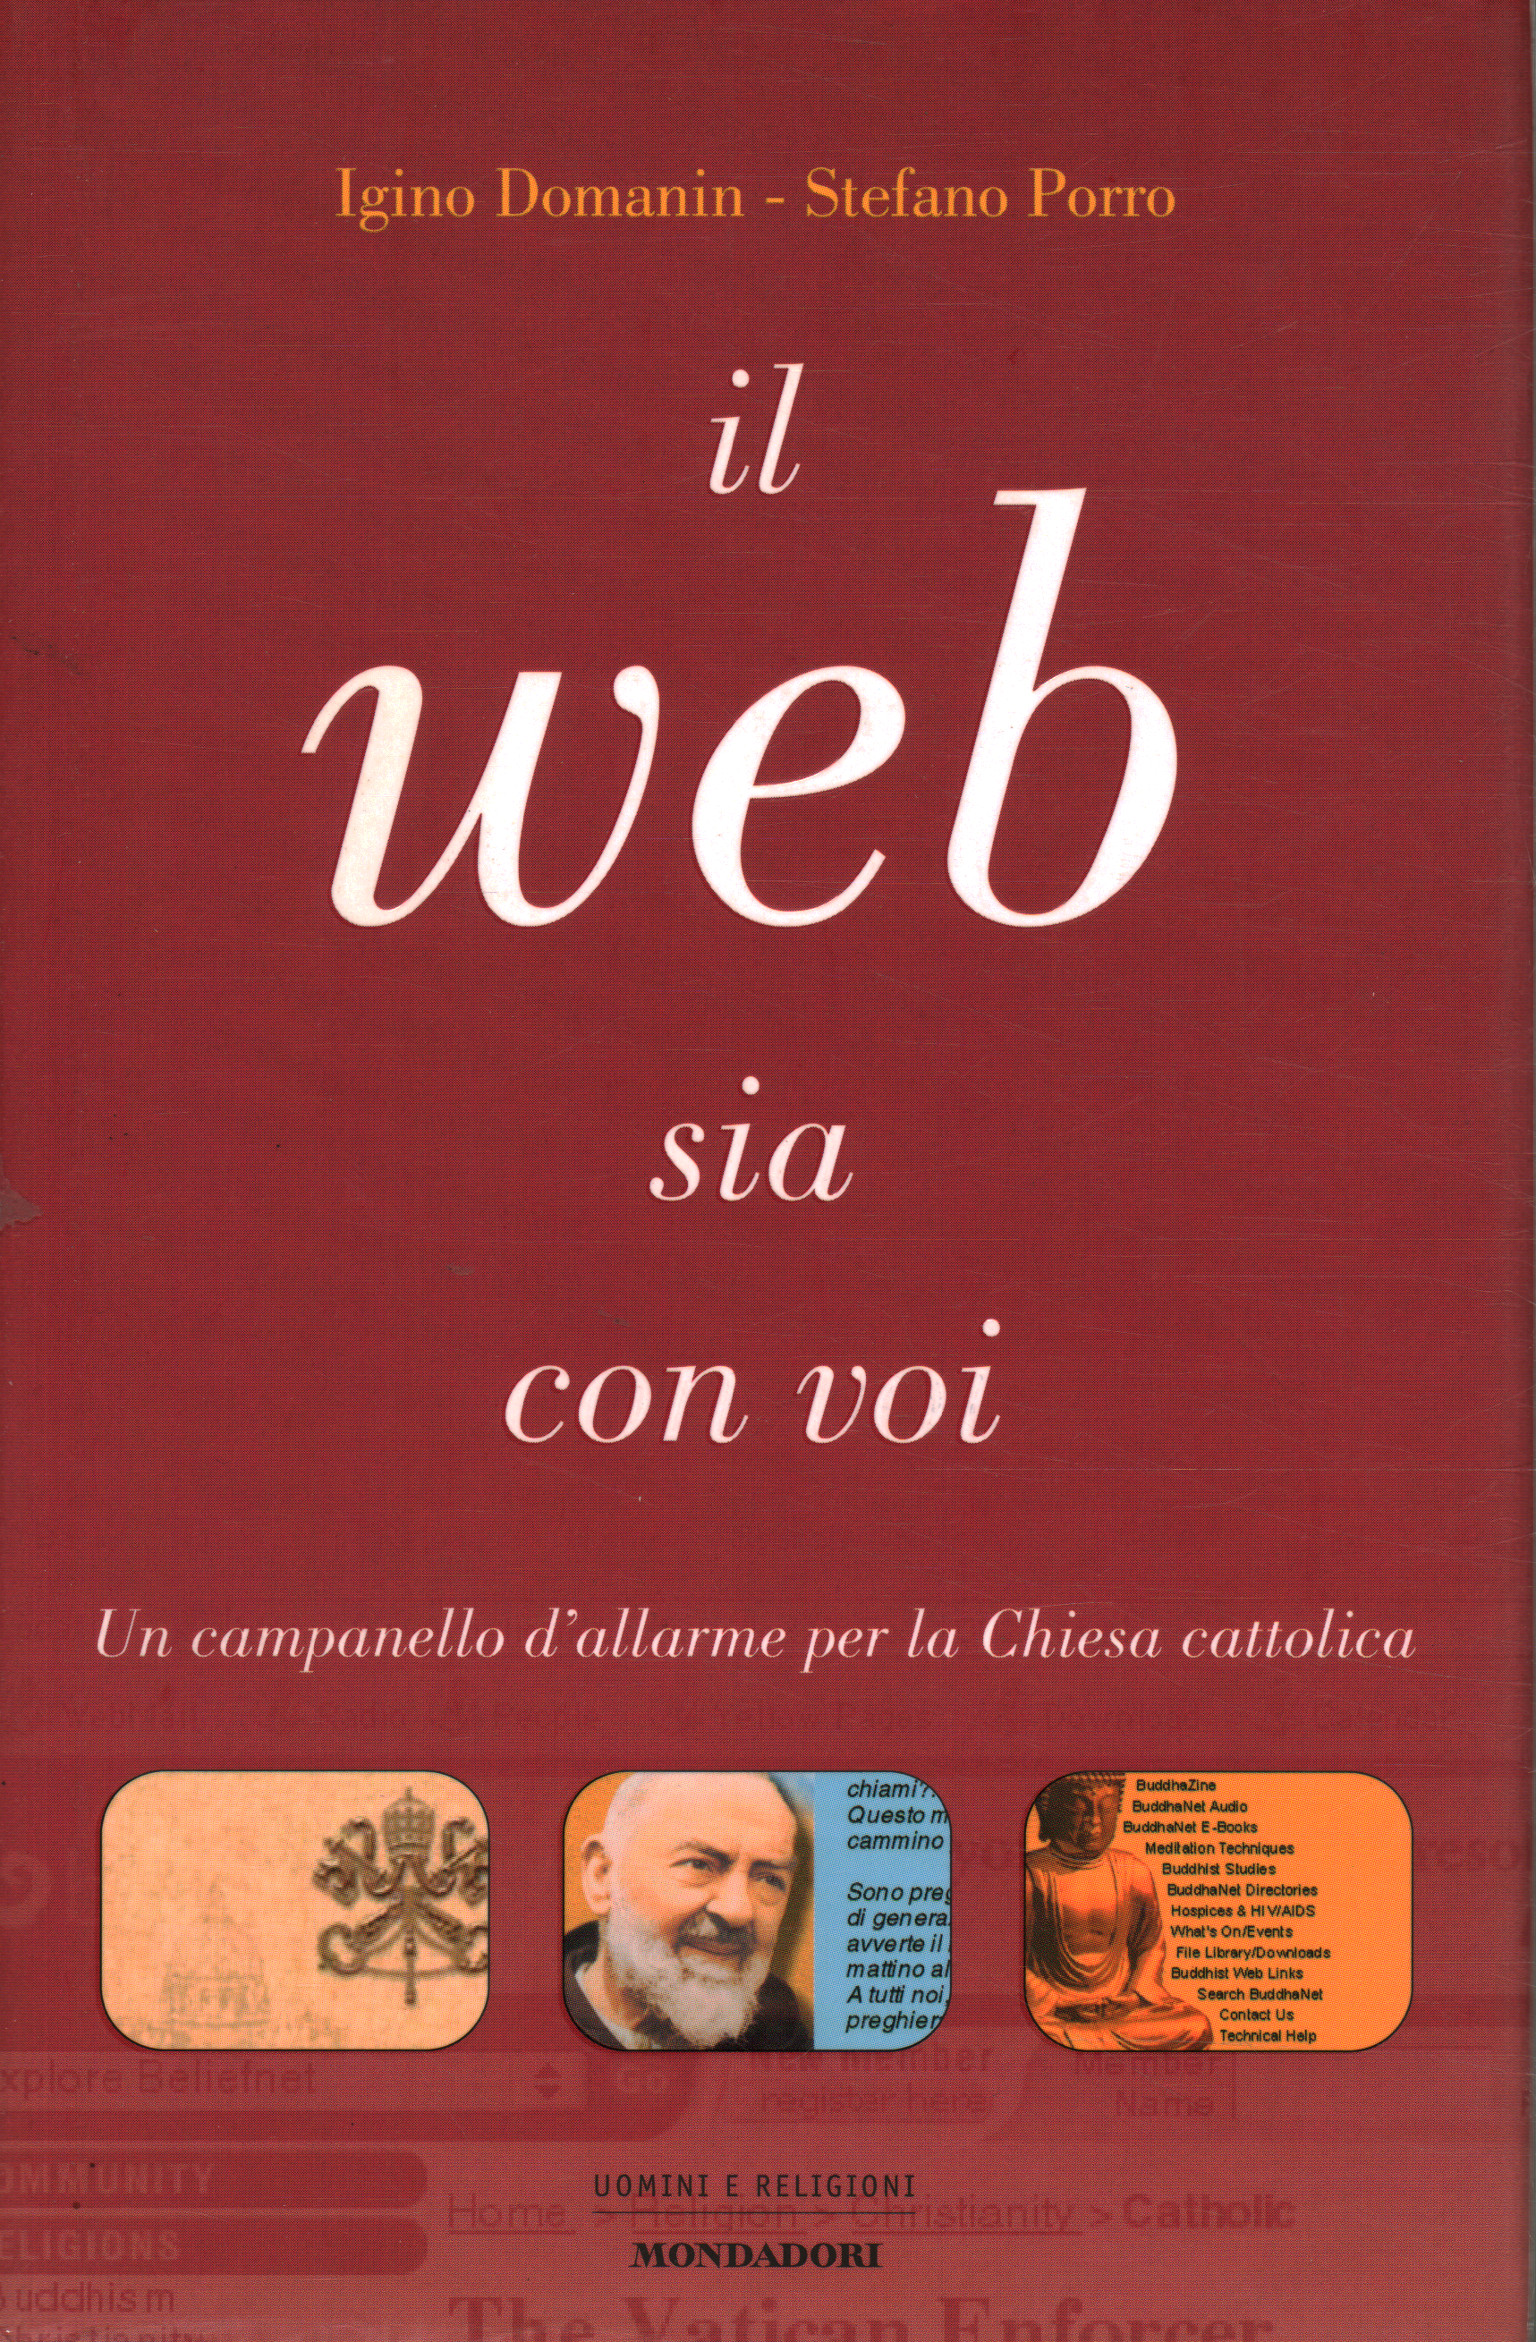 La web esté contigo, Igino Domanin Stefano Porro